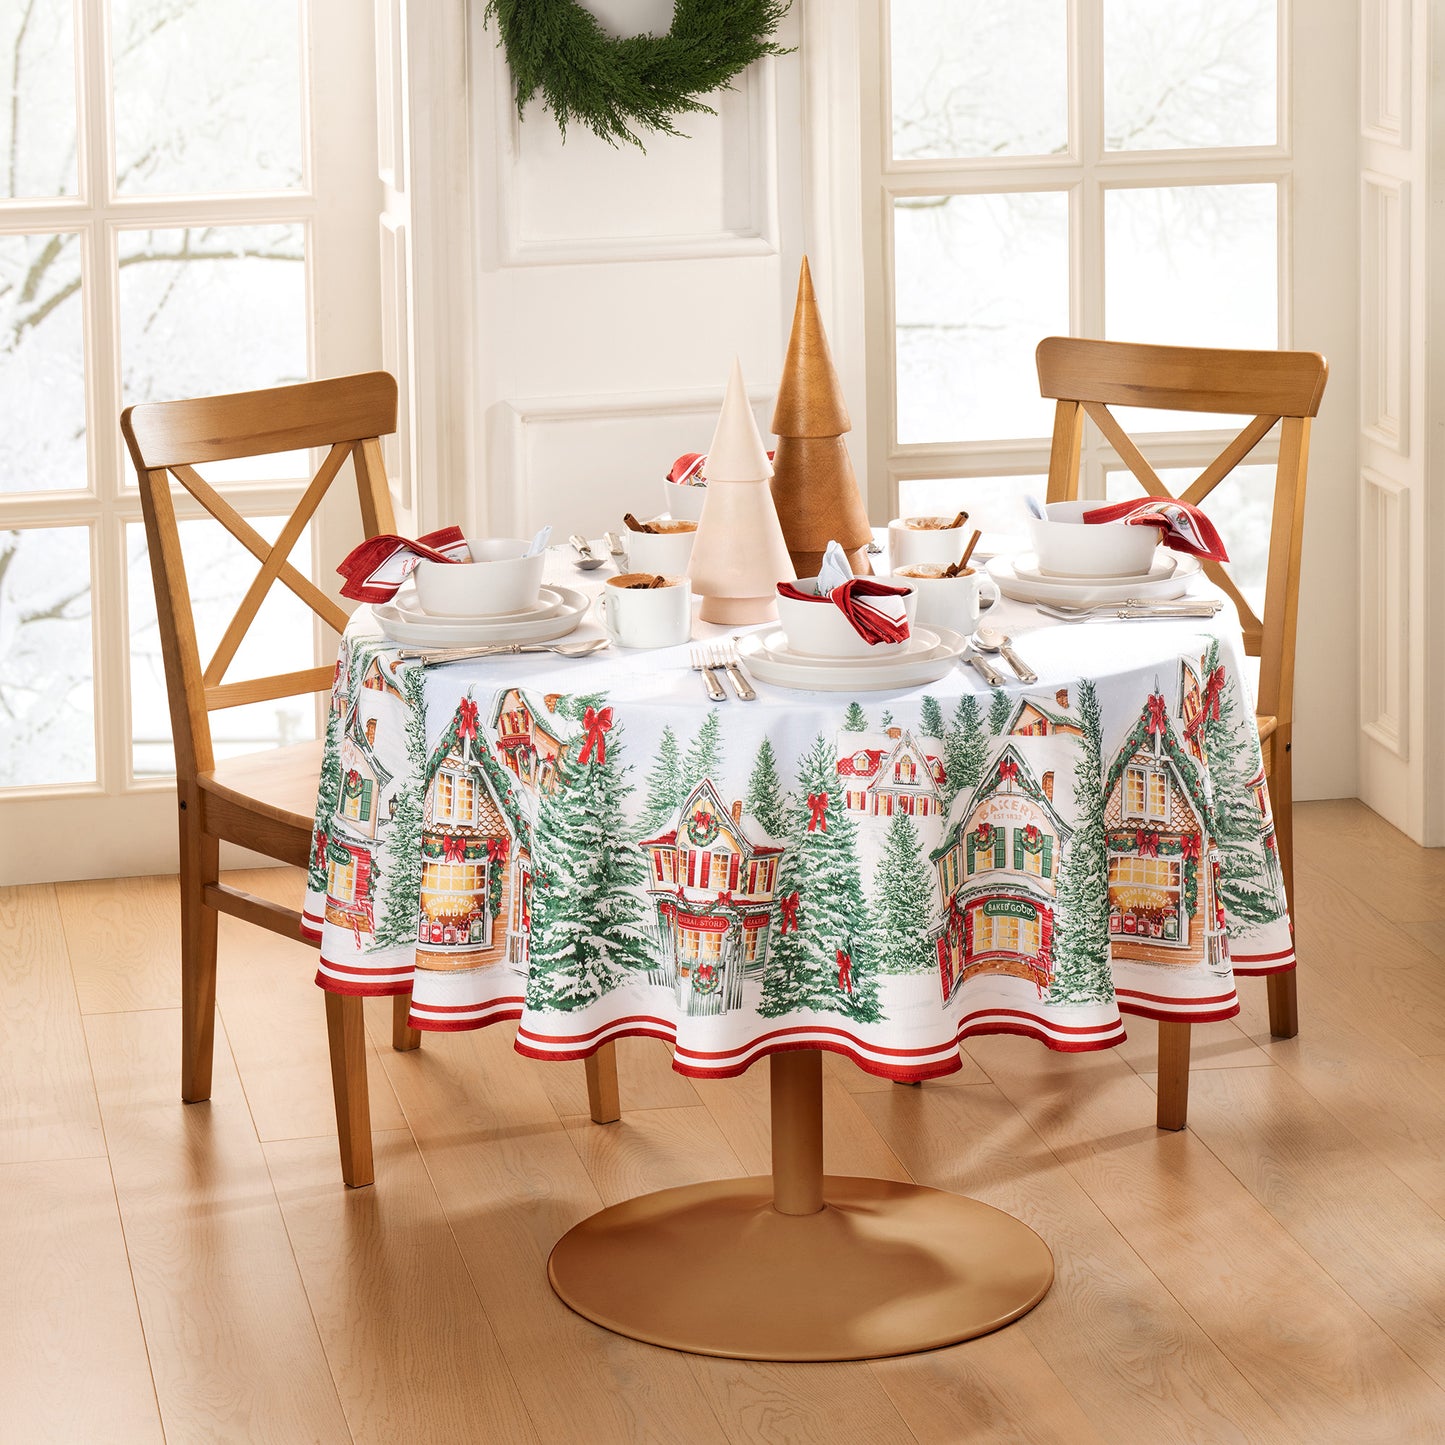 Storybook Christmas Village Holiday Tablecloth